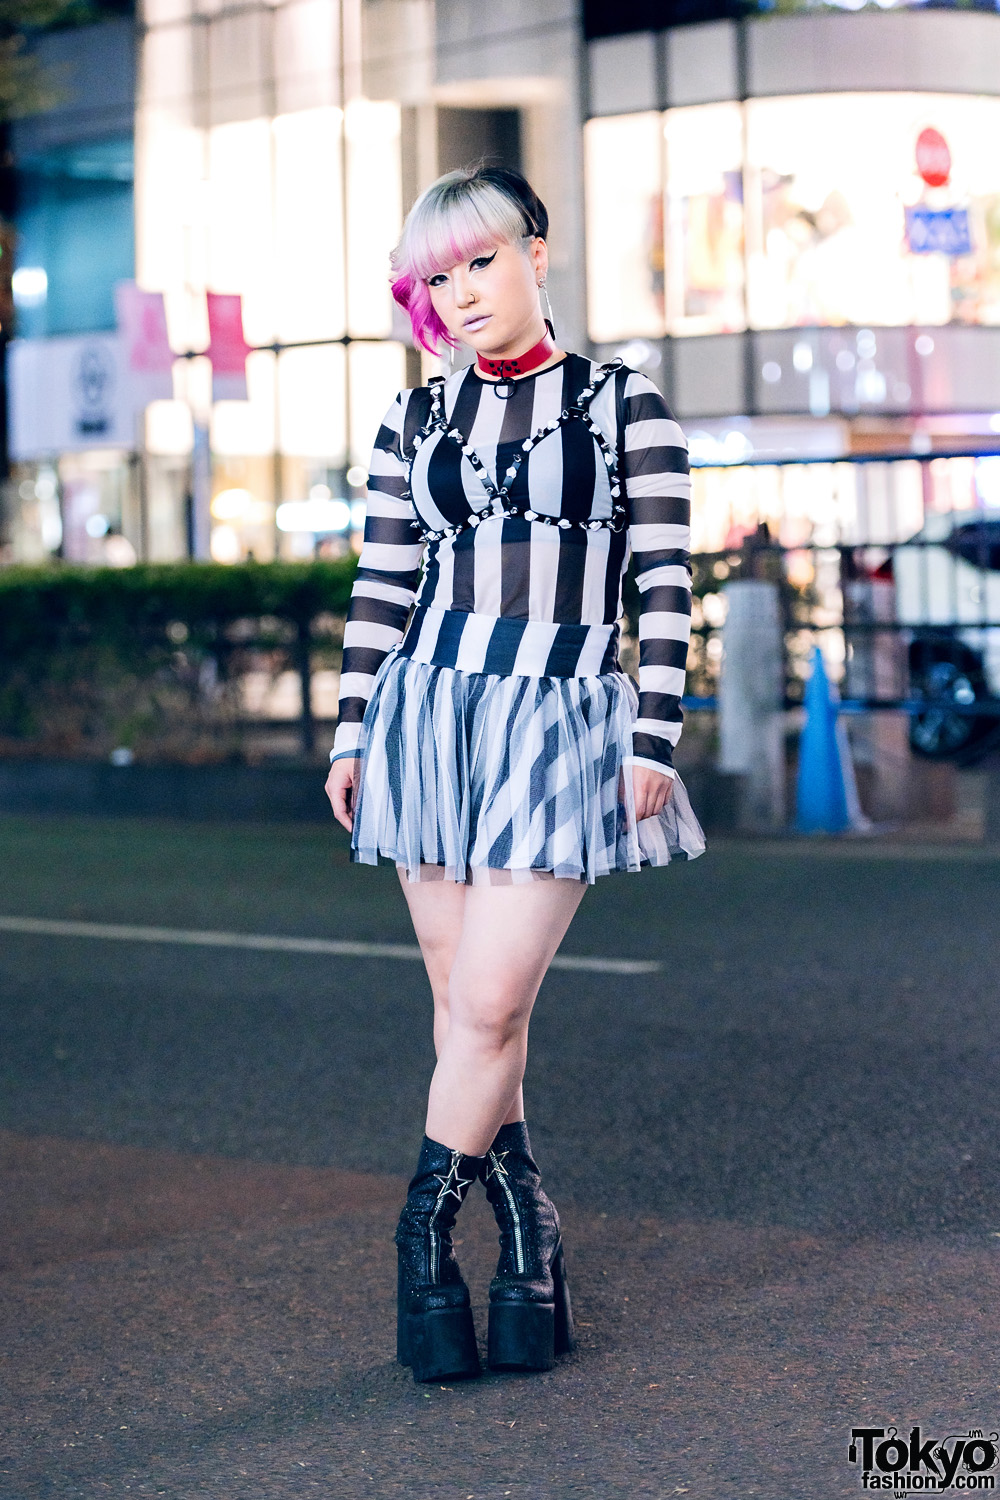 Japanese Singer/Songwriter in Monochrome Street Style w/ Pink-Tipped Updo, Bra Harness, Dolls Kill Striped Top, Tulle Skirt & Platform Glitter Boots